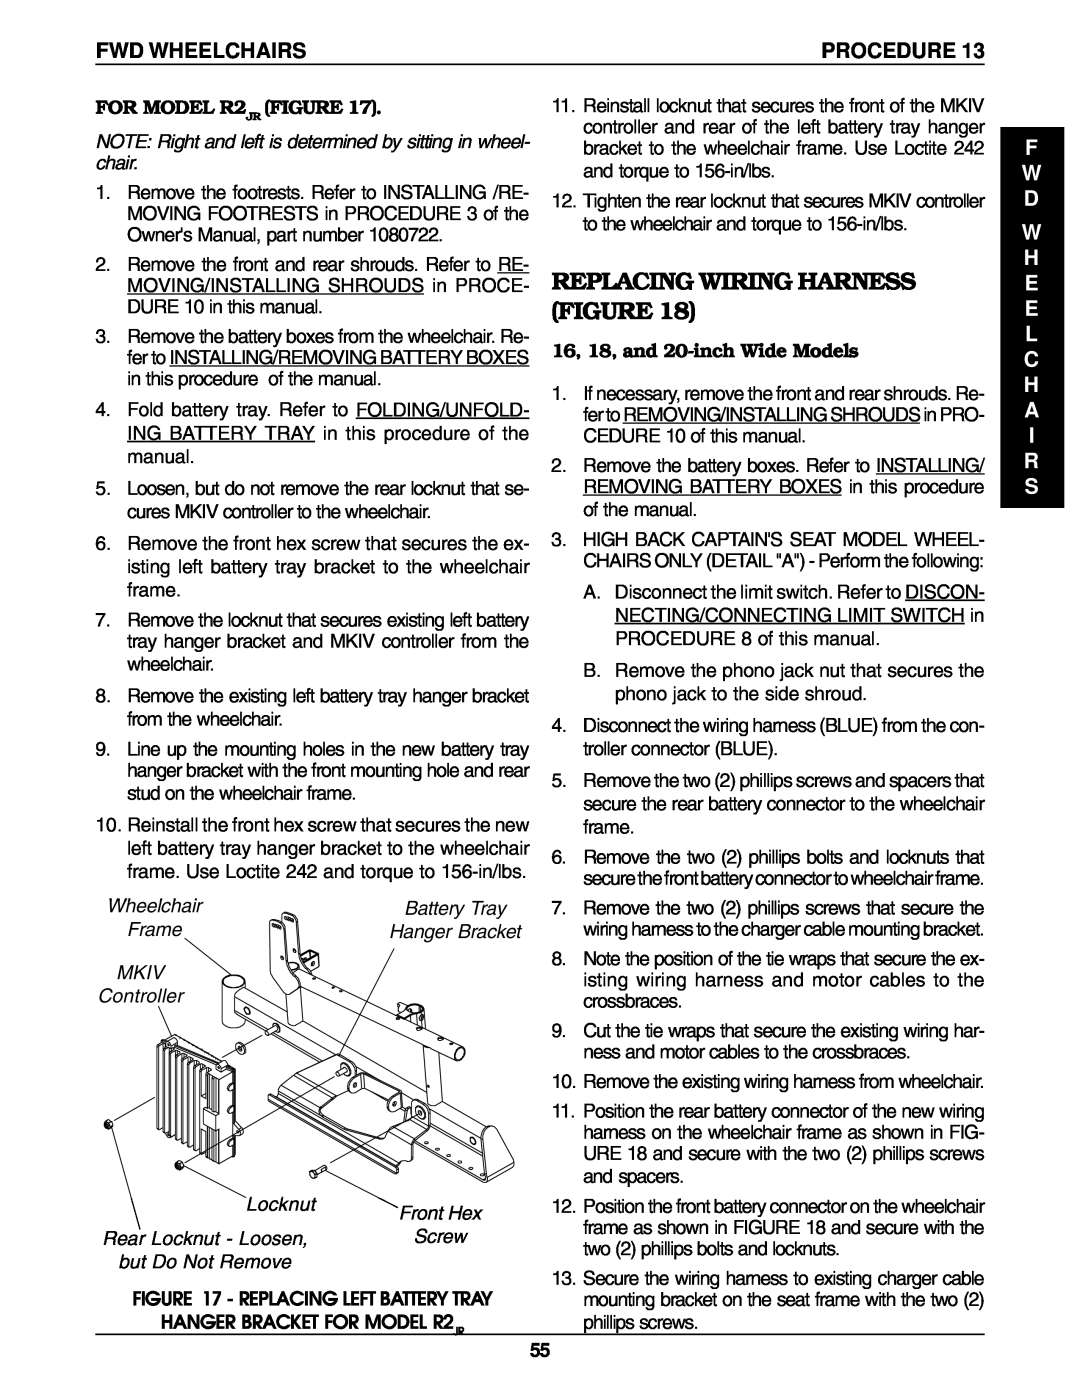 Invacare Ranger II250 SERIES Replacing Wiring Harness Figure, F W D W H E E L C H A I R S, Procedure, MKIV Controller 